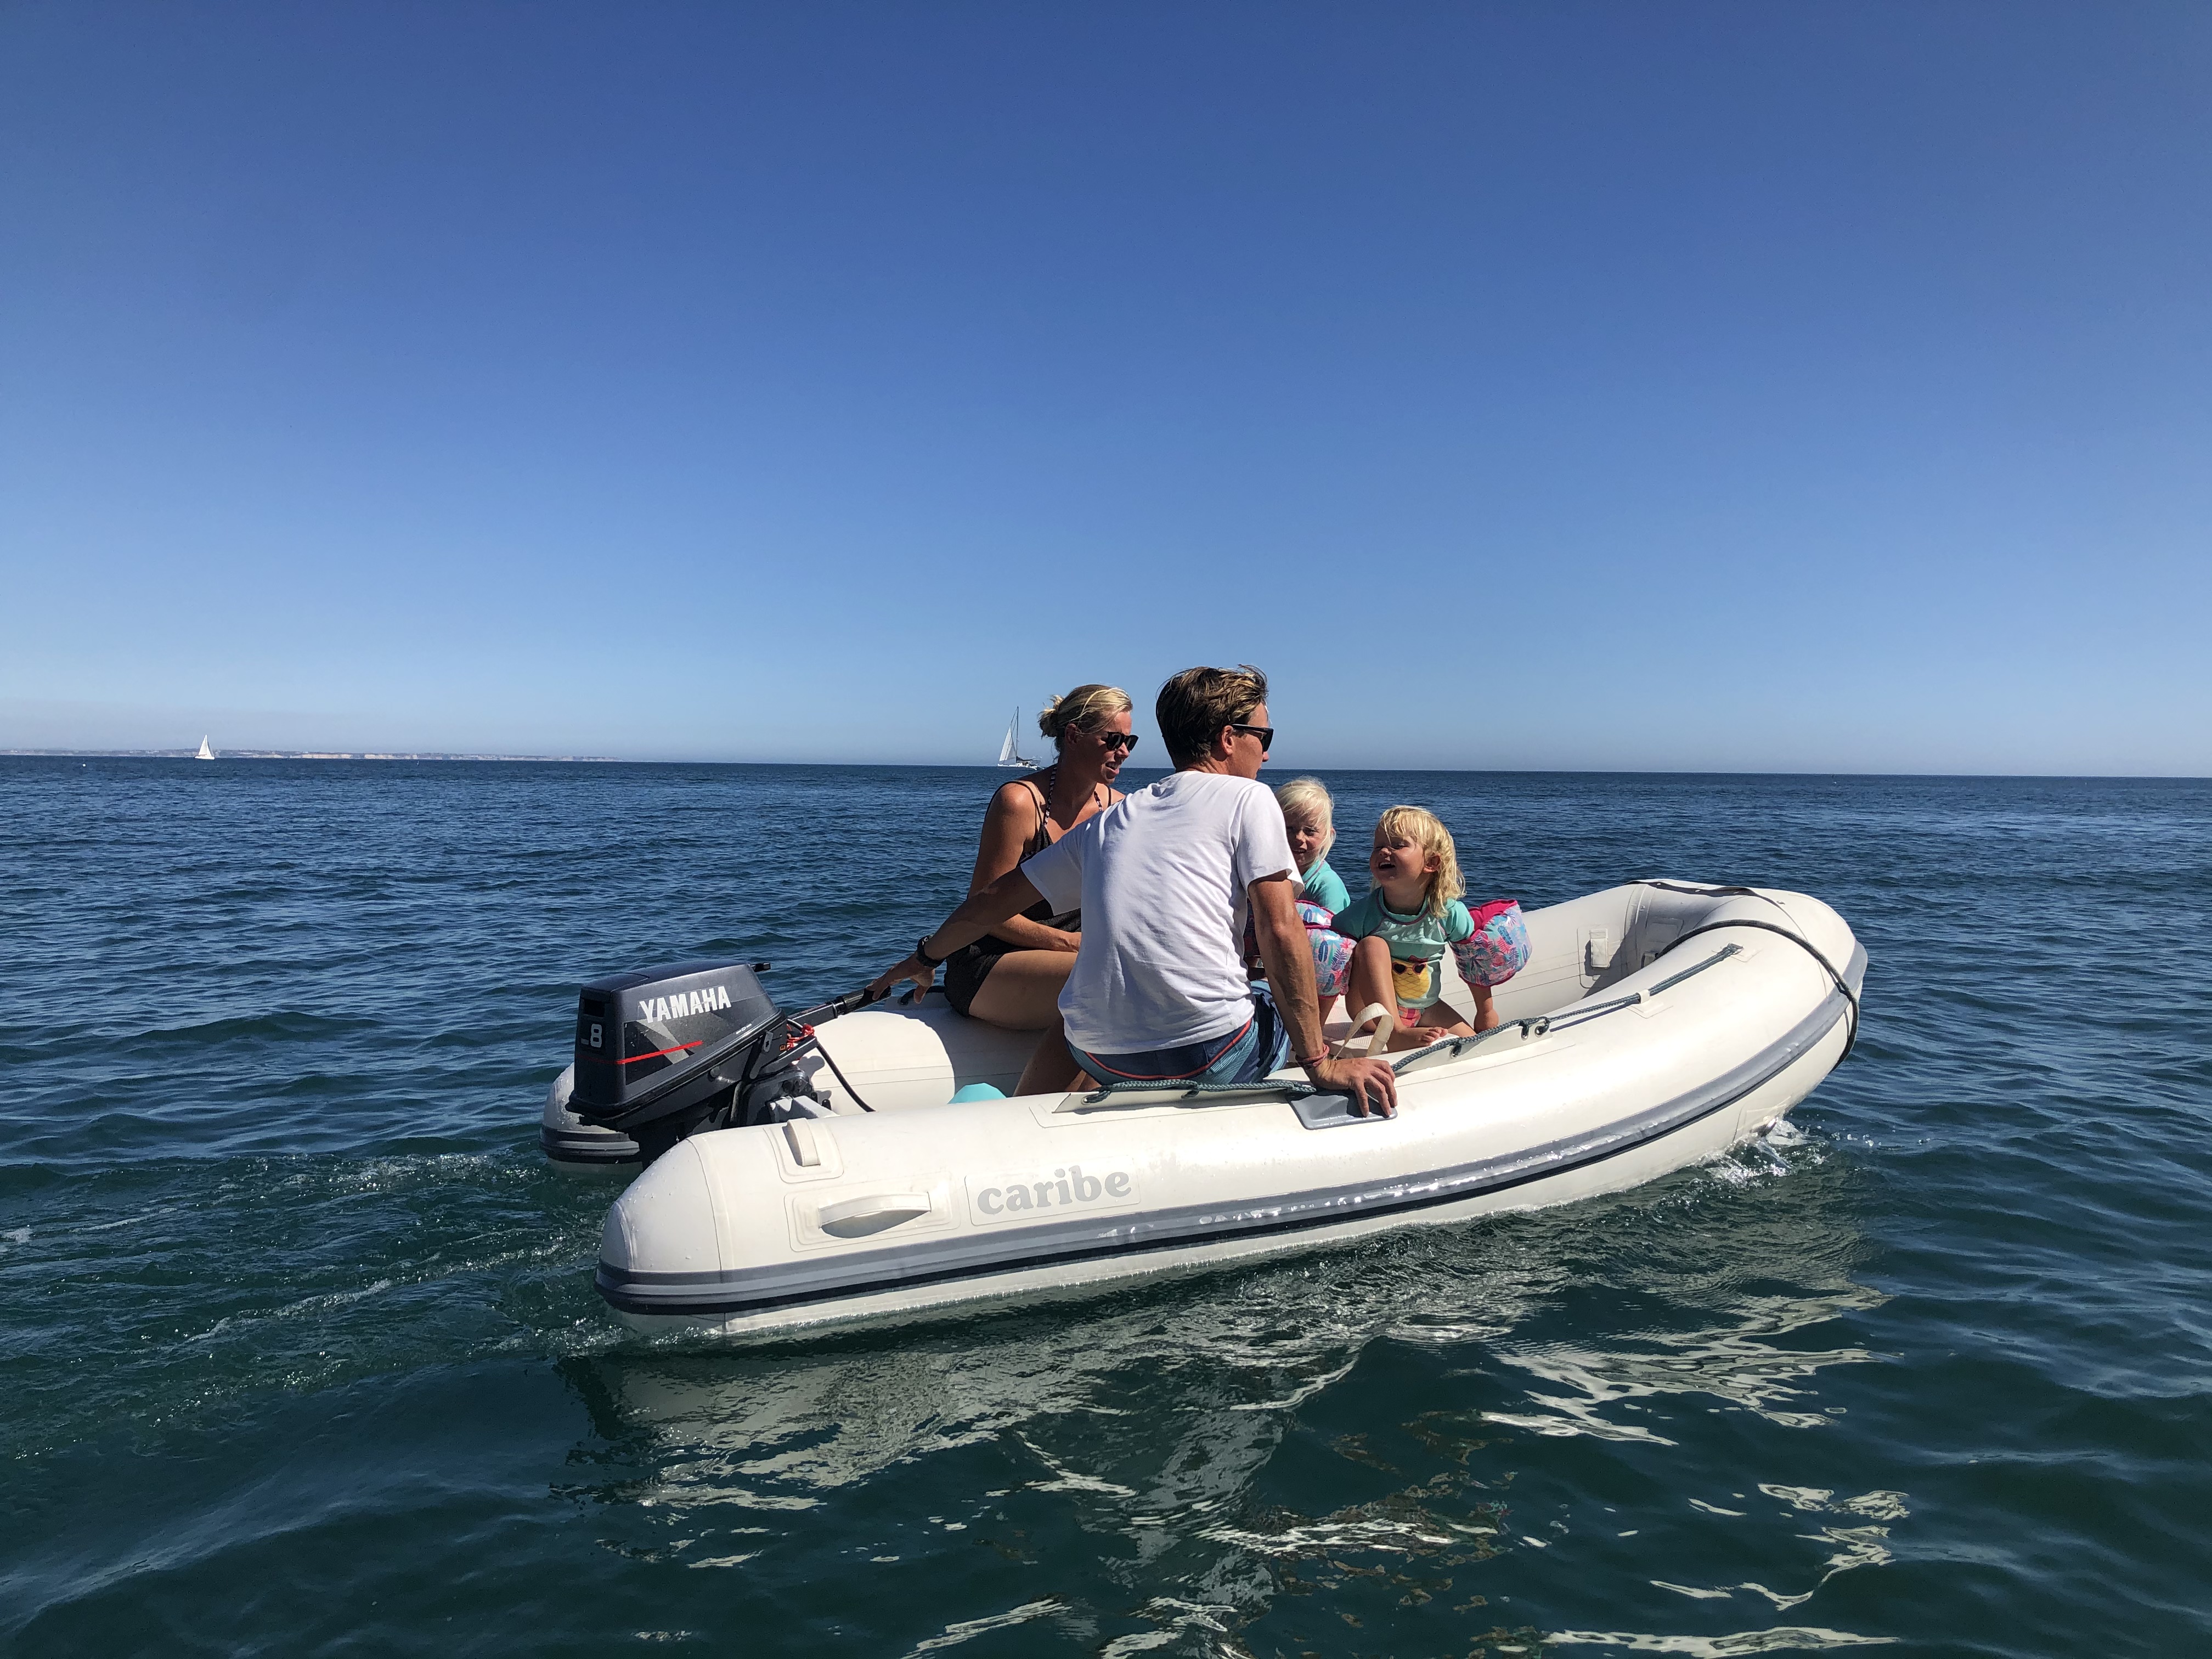 Zeilen varen vertrekken wereld rond reizen boot keven portugal lissabon anker bezoeken vrienden zwemmen